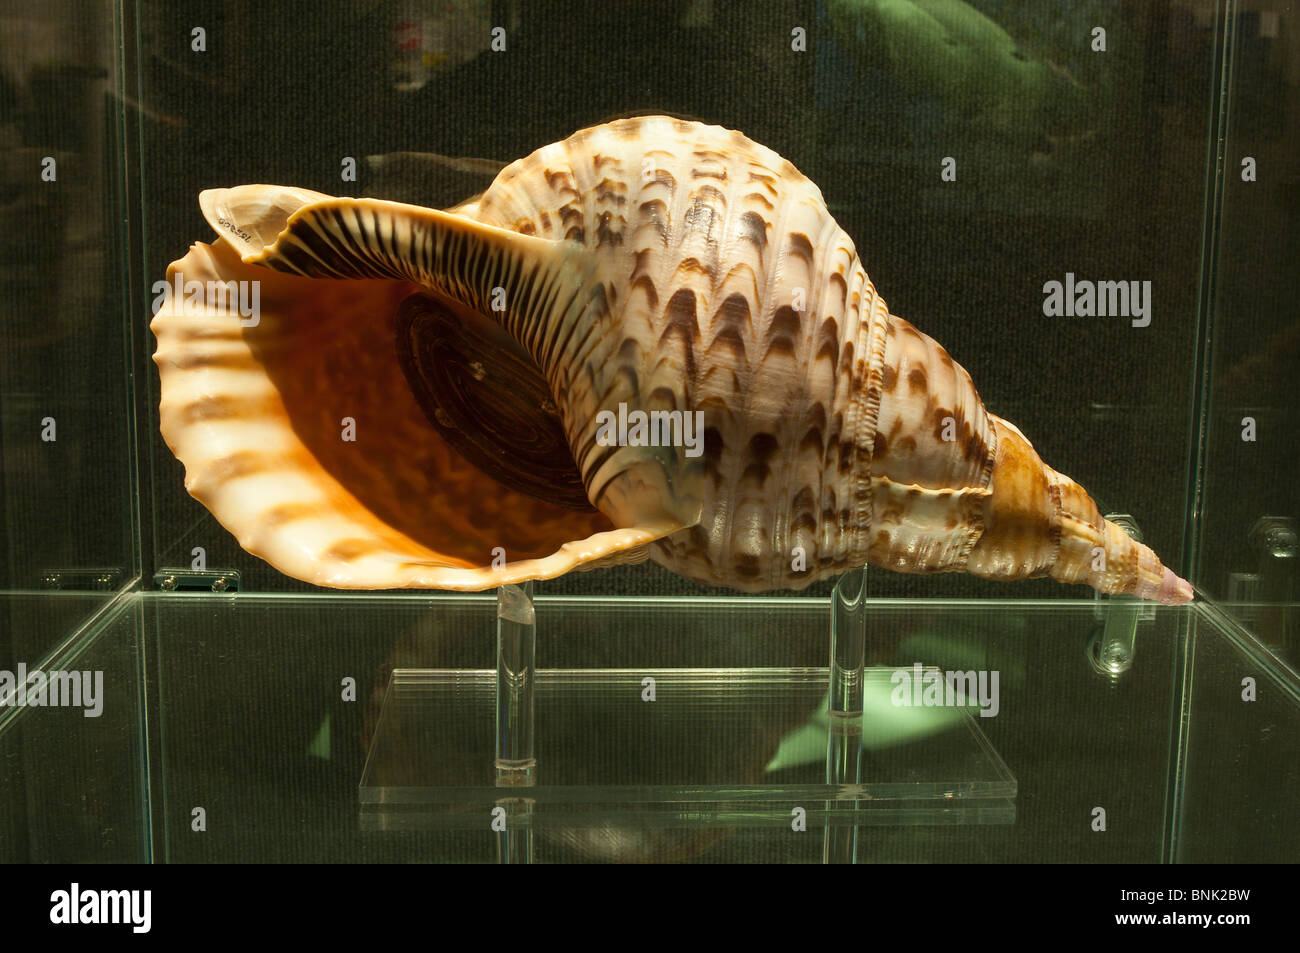 Texas, Corpus Christi. Triton seashell at the Corpus Christi Museum. Stock Photo